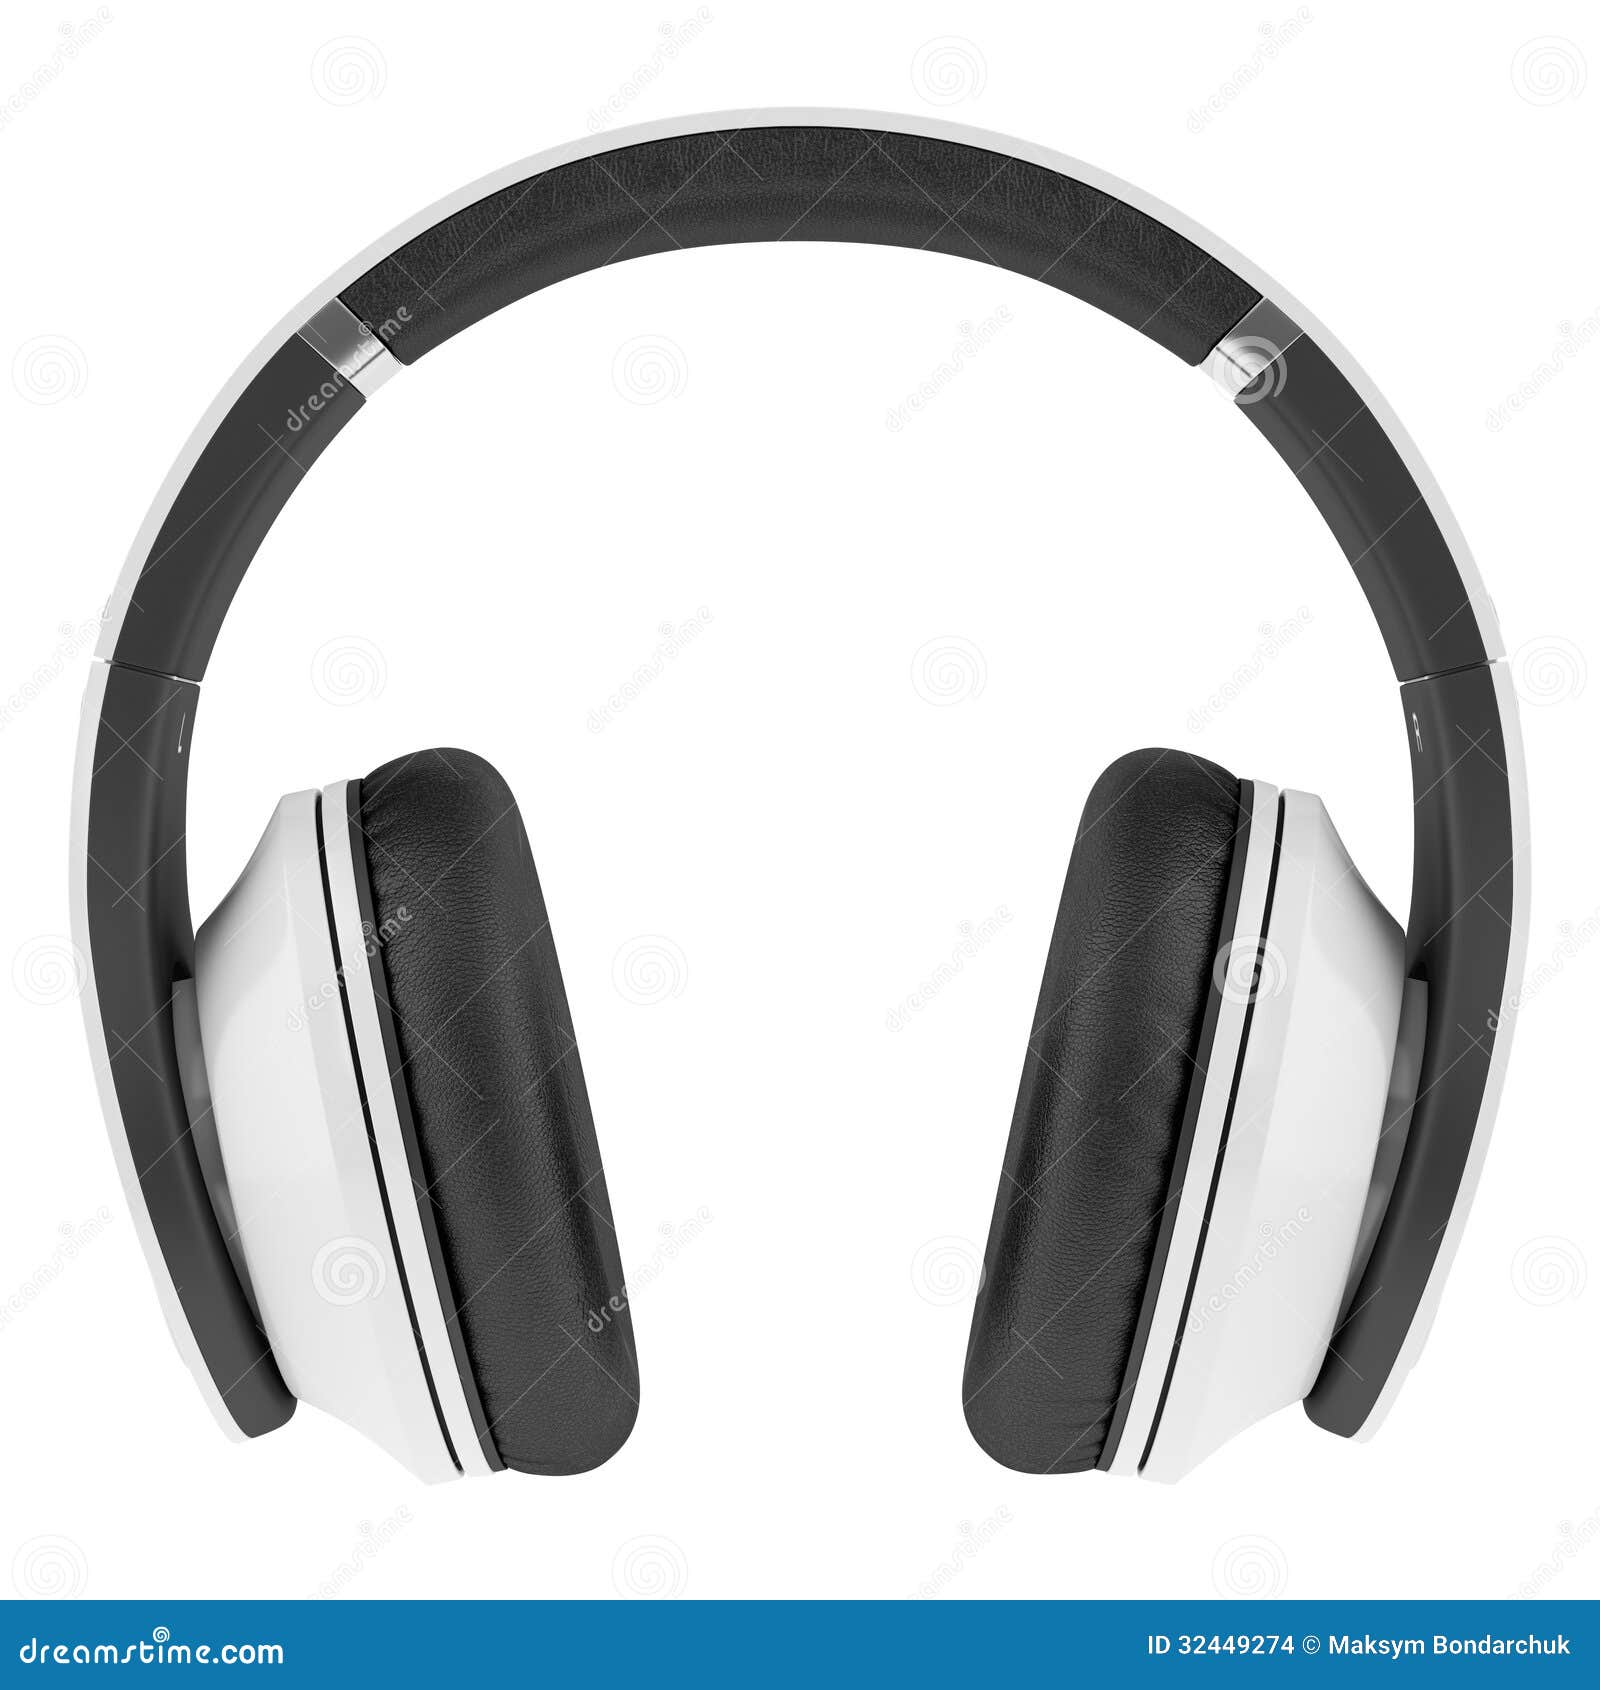 white and black wireless headphones  on white